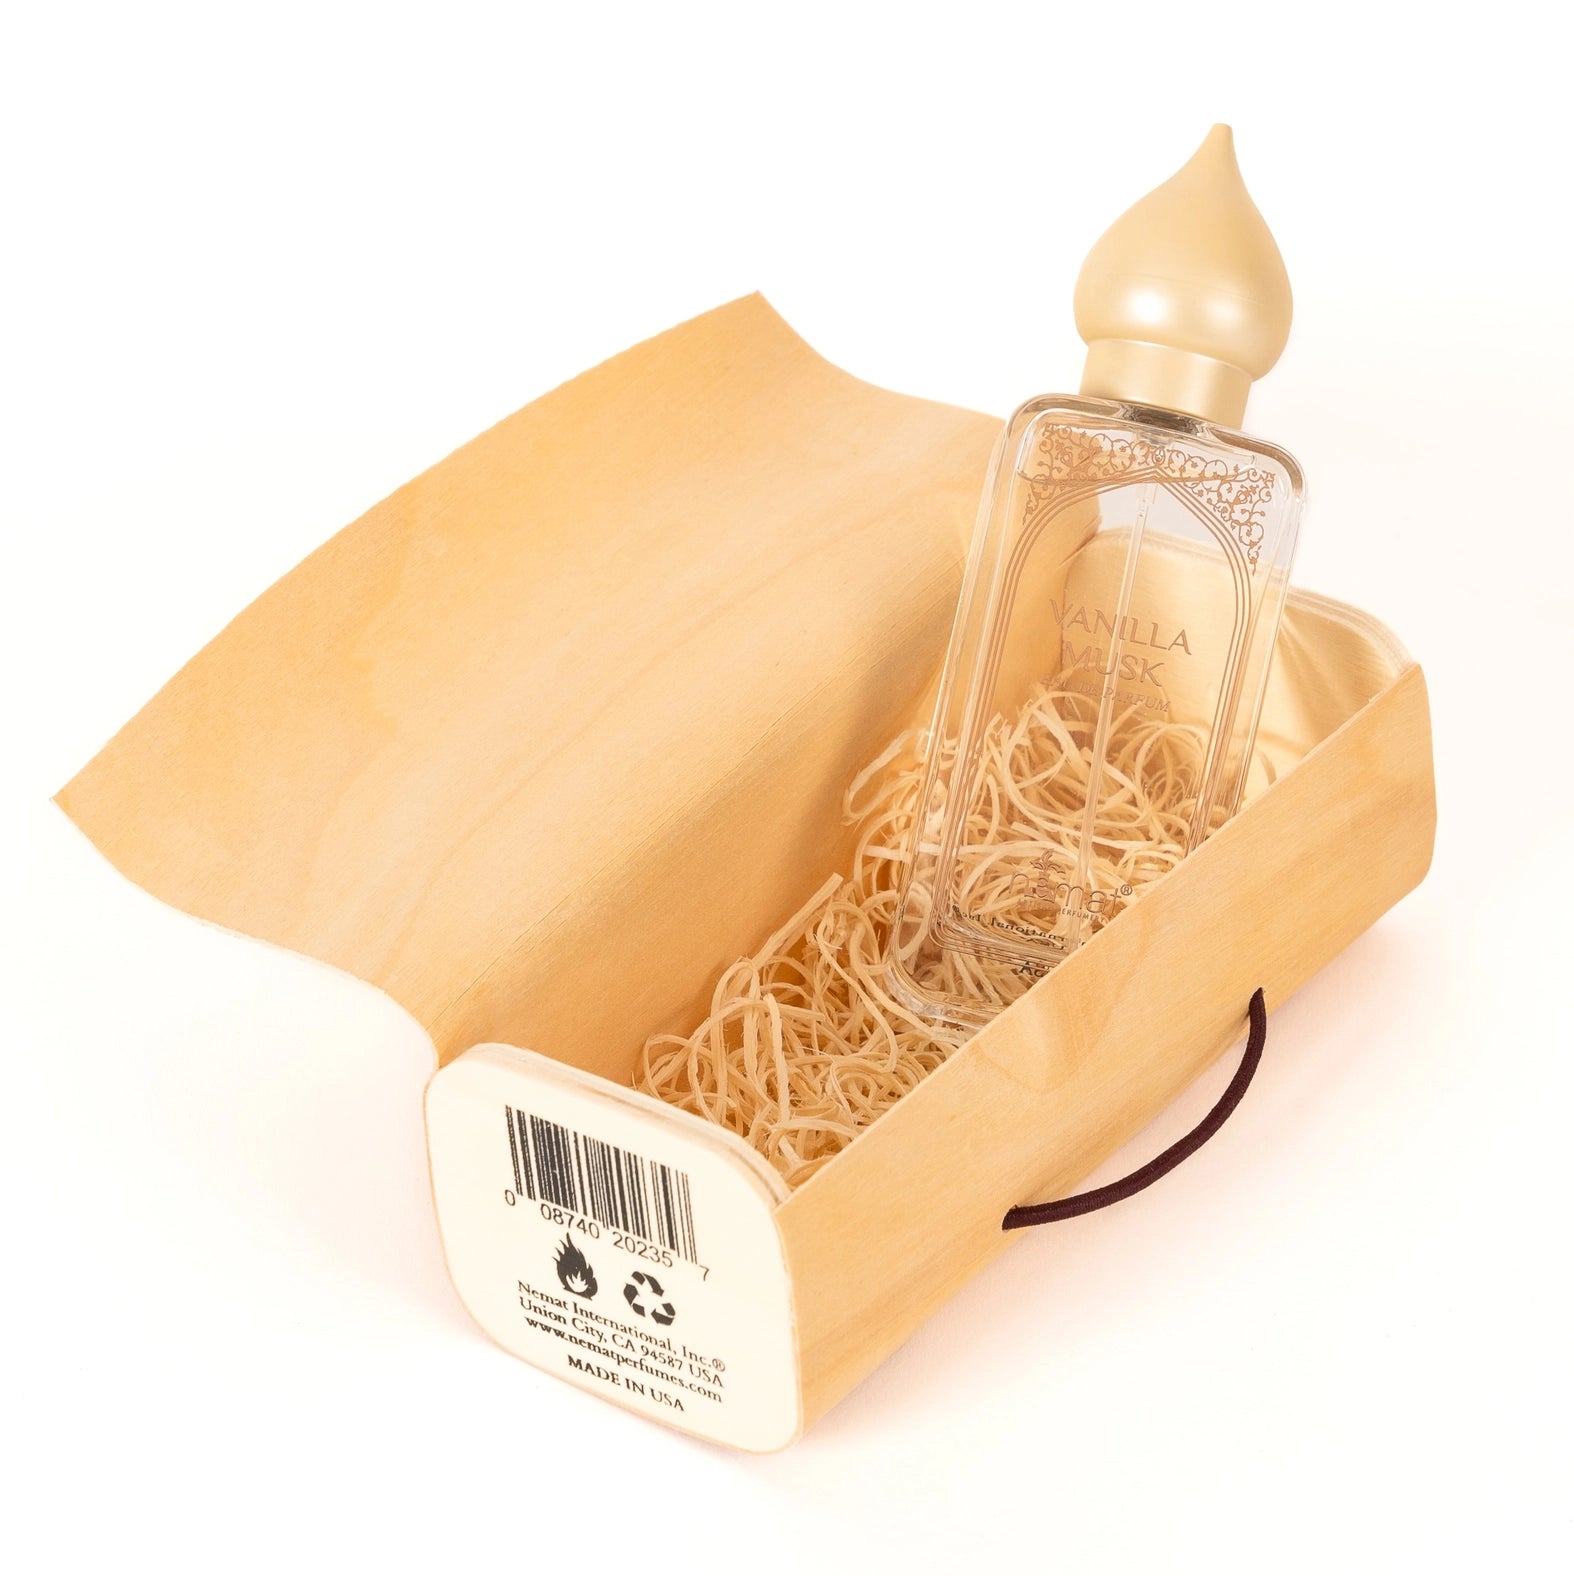 vanilla musk nemat eau de parfum perfume and fragrance diffuser case, available at wehitpan.com, product photos, not at sephora or ulta 